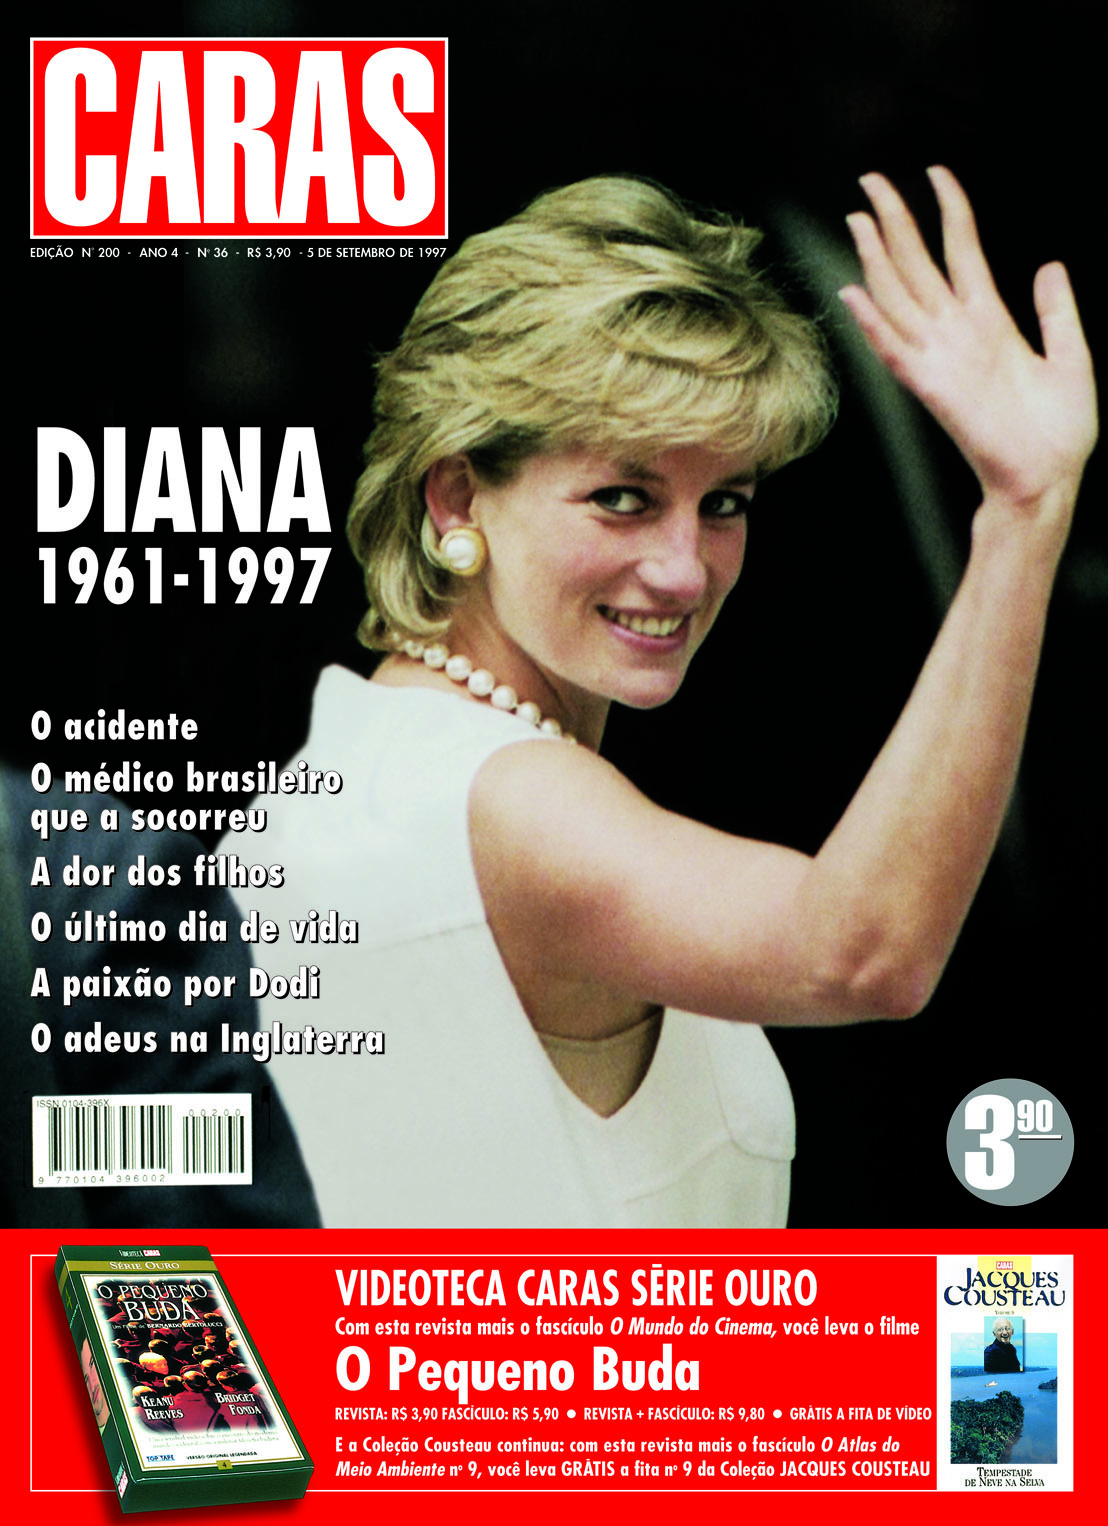 Princesa Diana na capa da revista CARAS